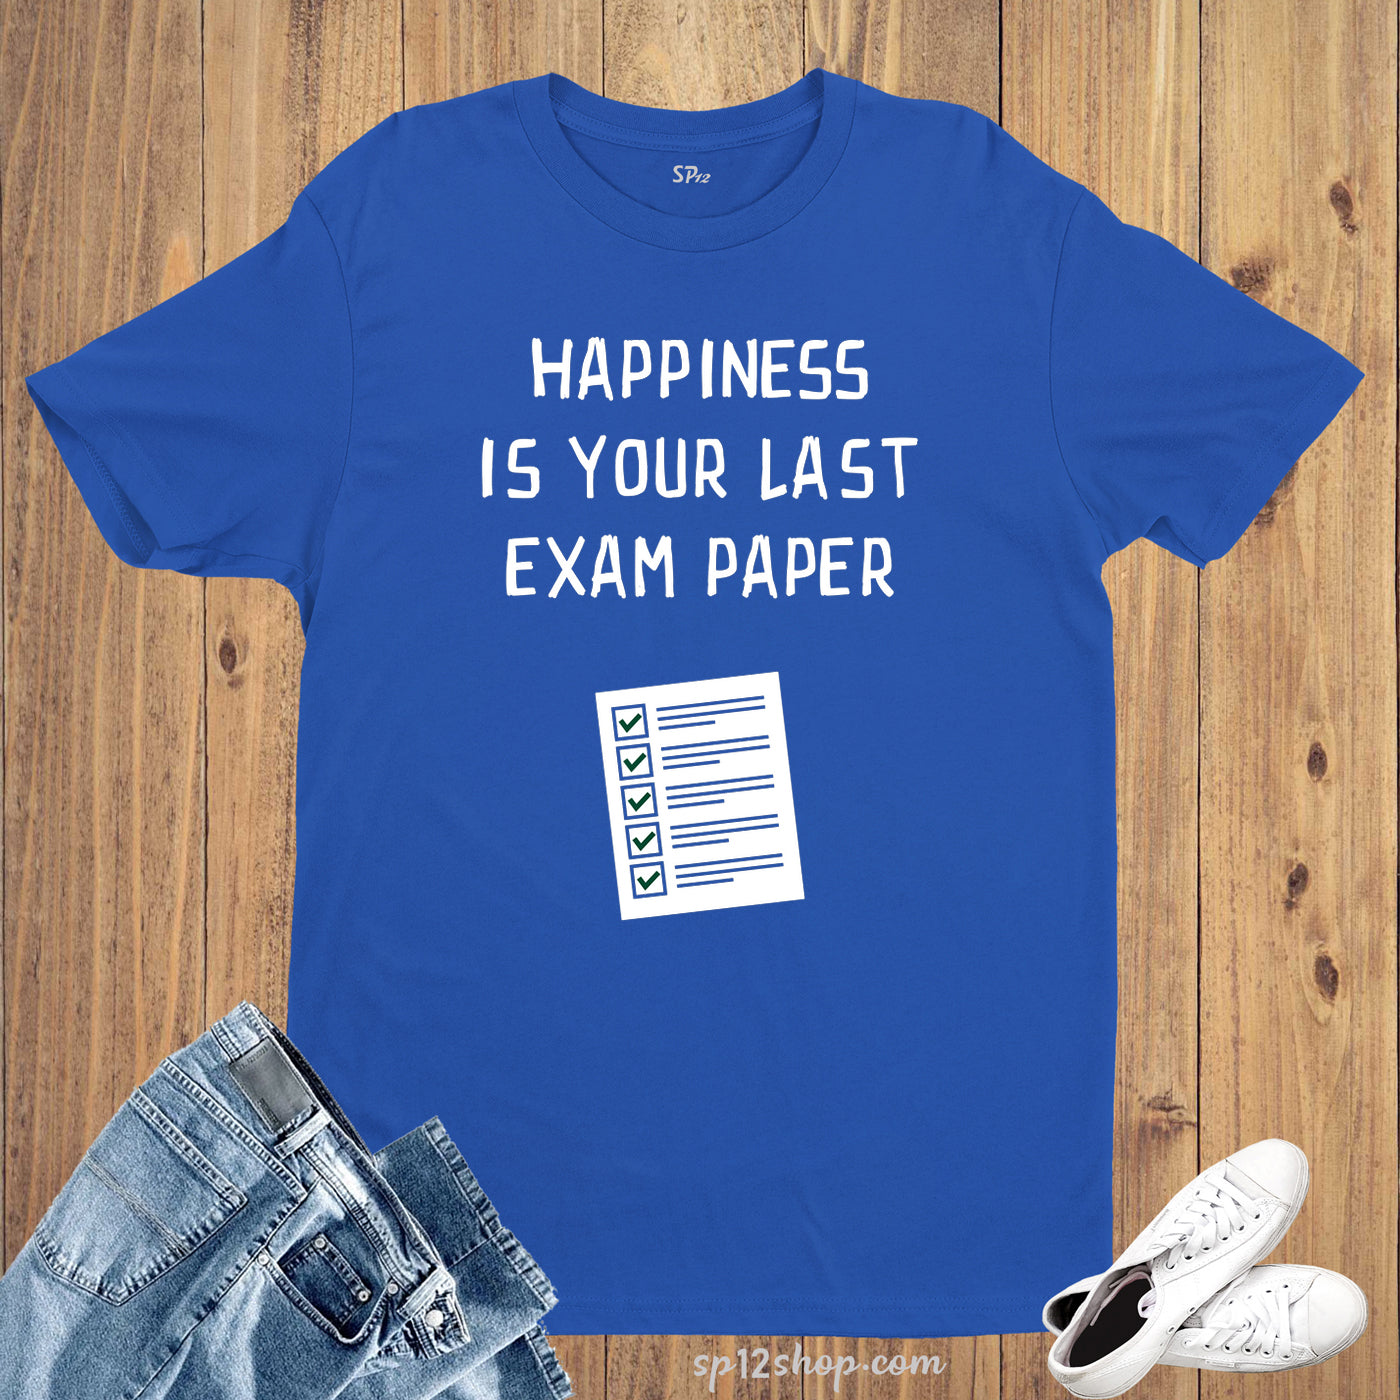 Exam Paper Happiness Life Quotes Slogan T Shirt